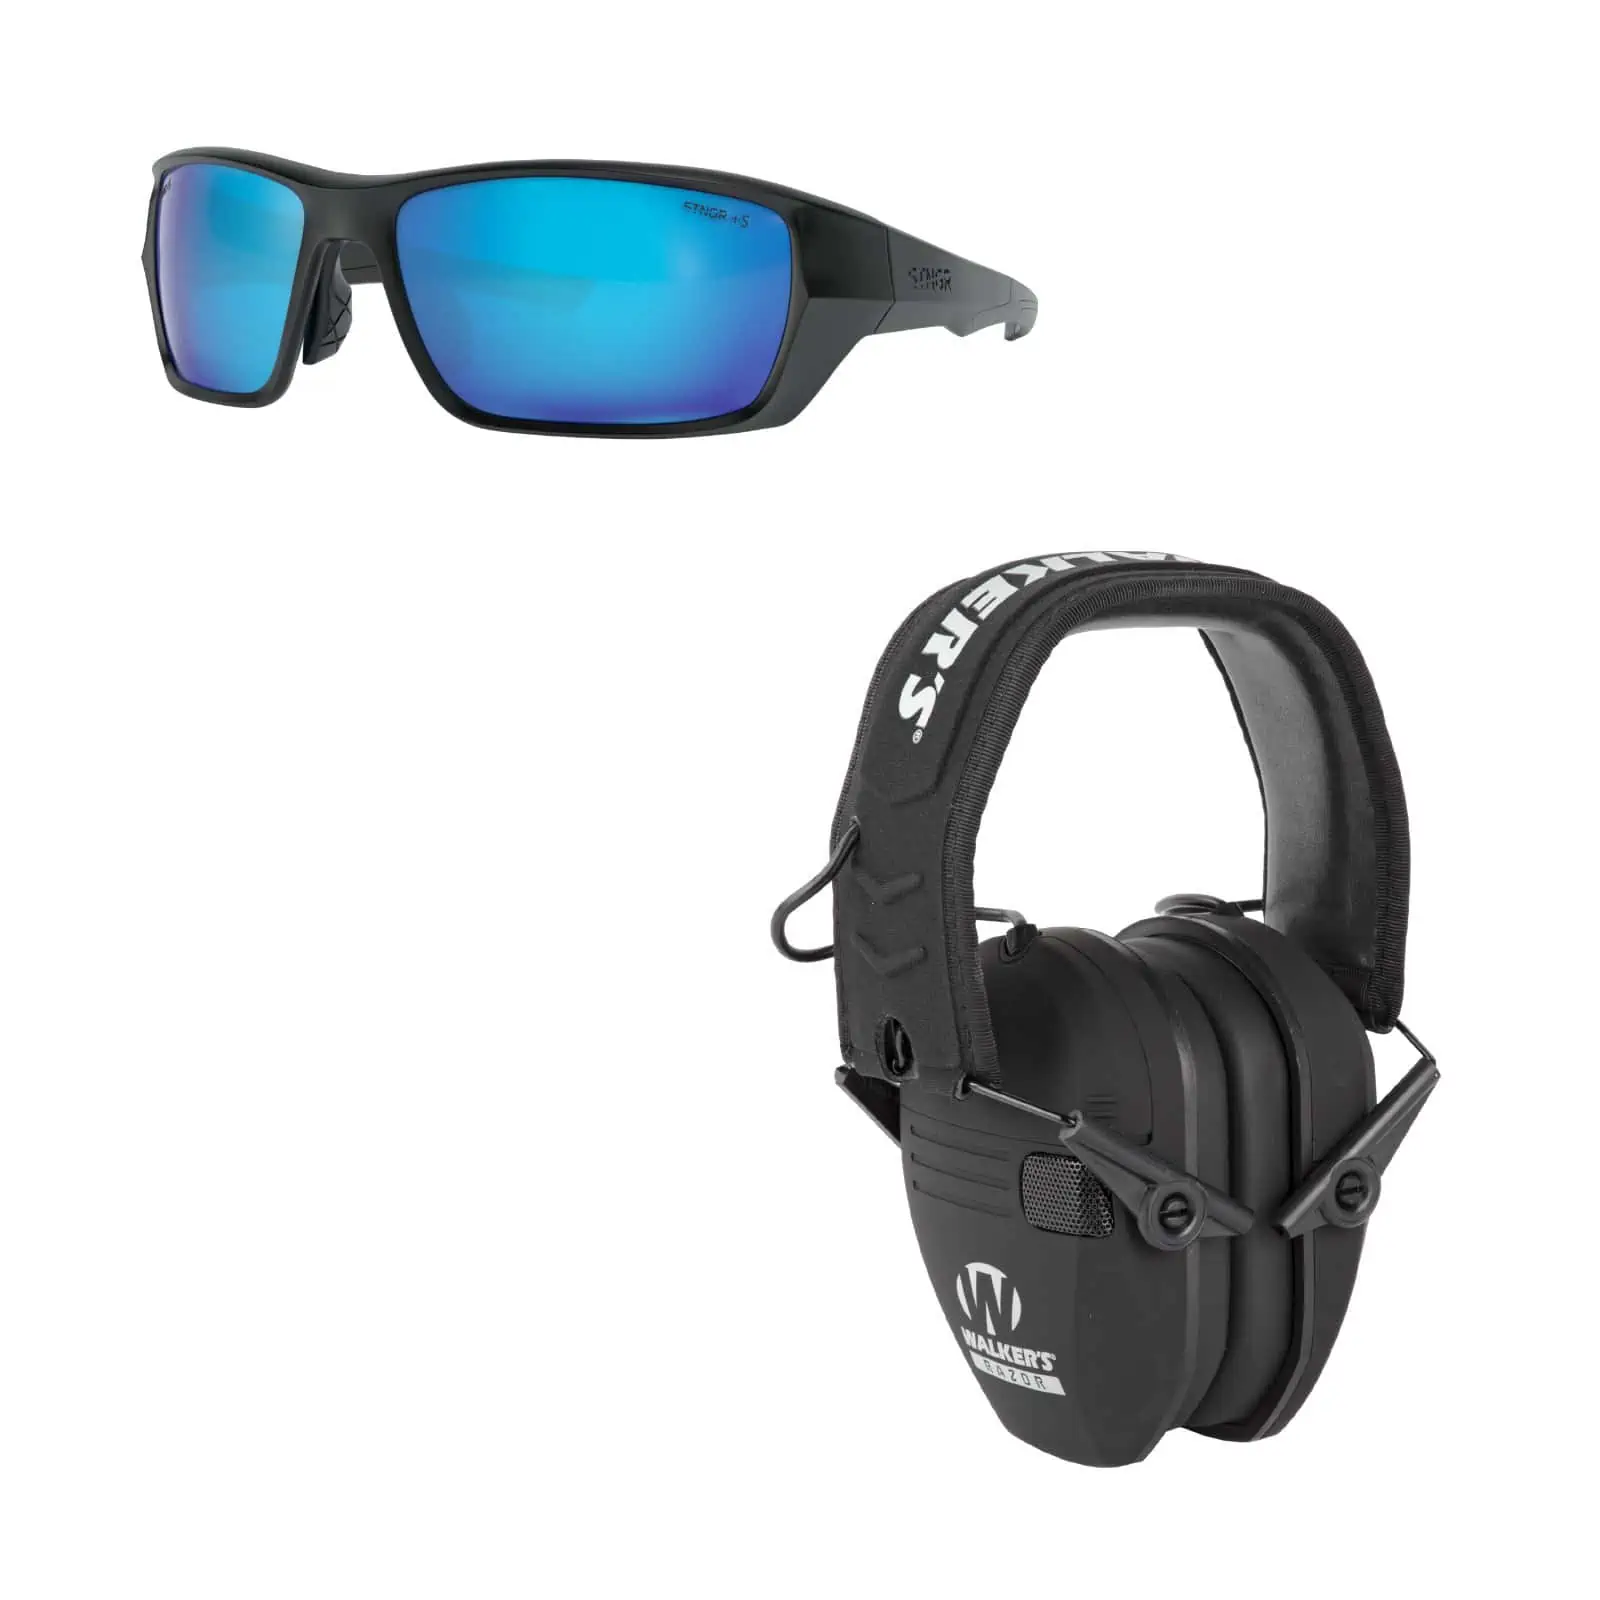 STNGR Alpine Ballistic Glasses + Walker’s Electronic Earmuffs